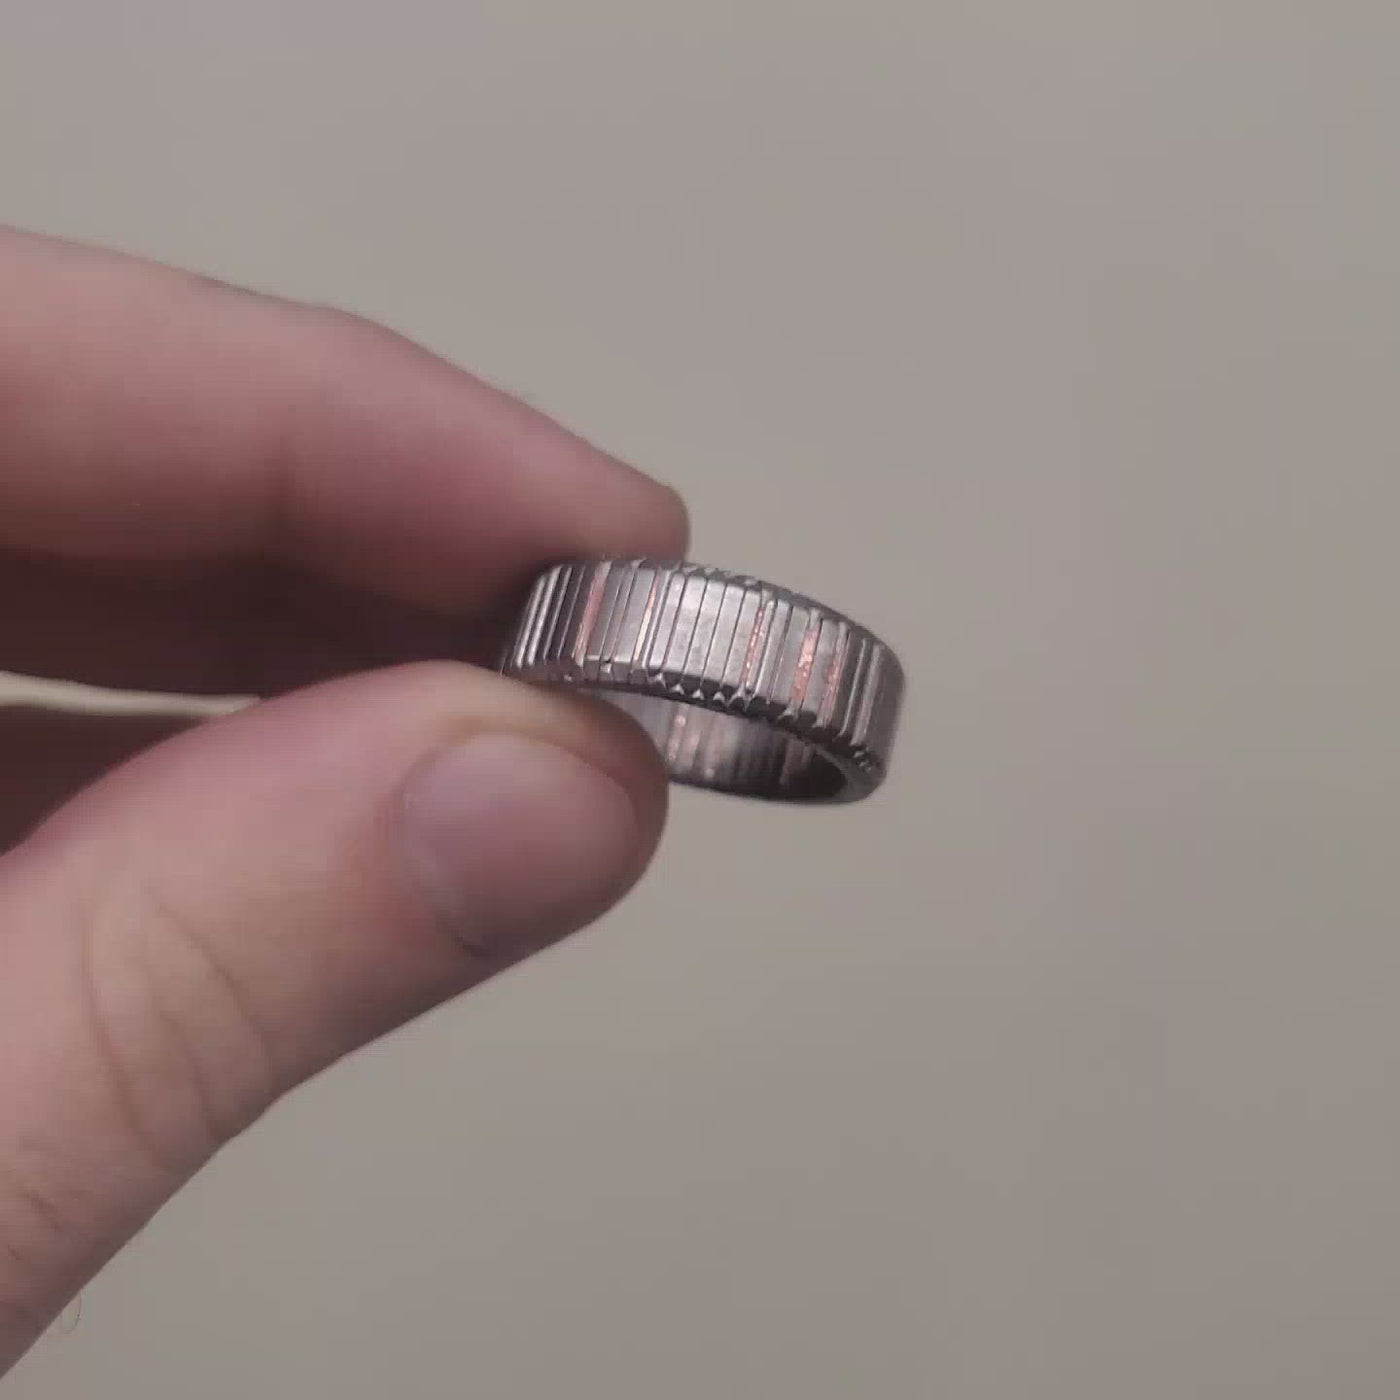 Superconductor men's wedding ring.